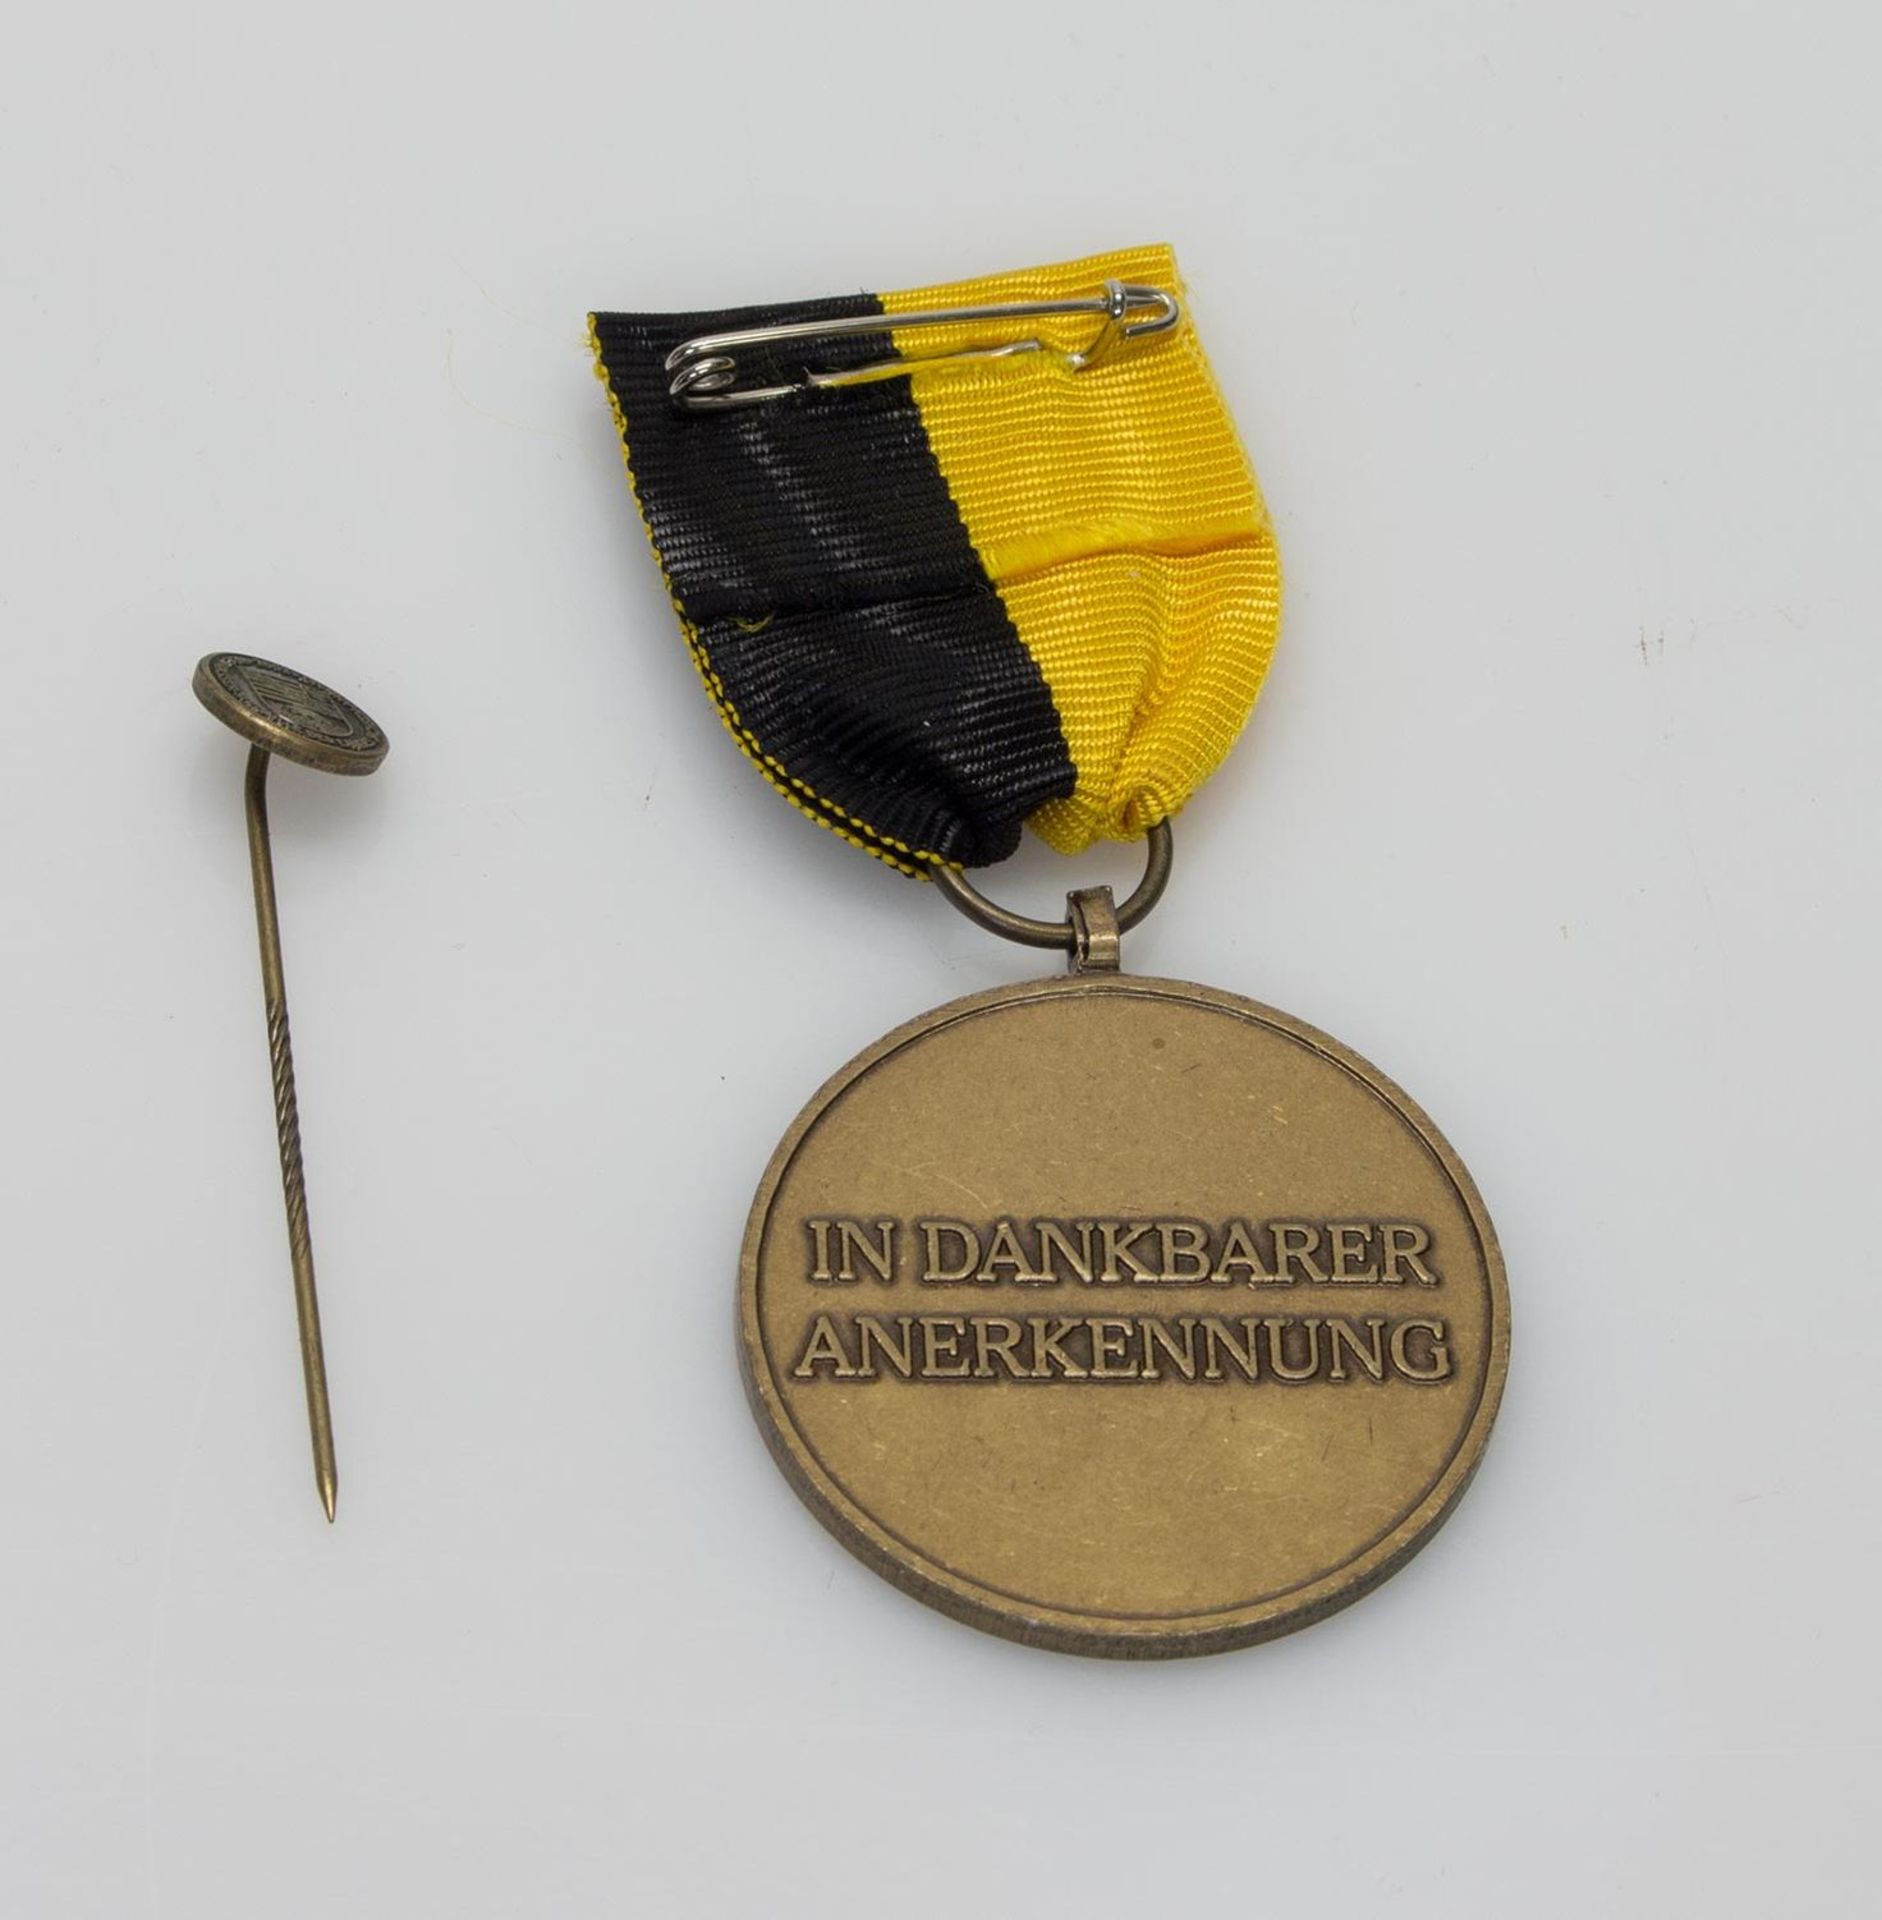 Hochwasser-Medaille - Image 2 of 3